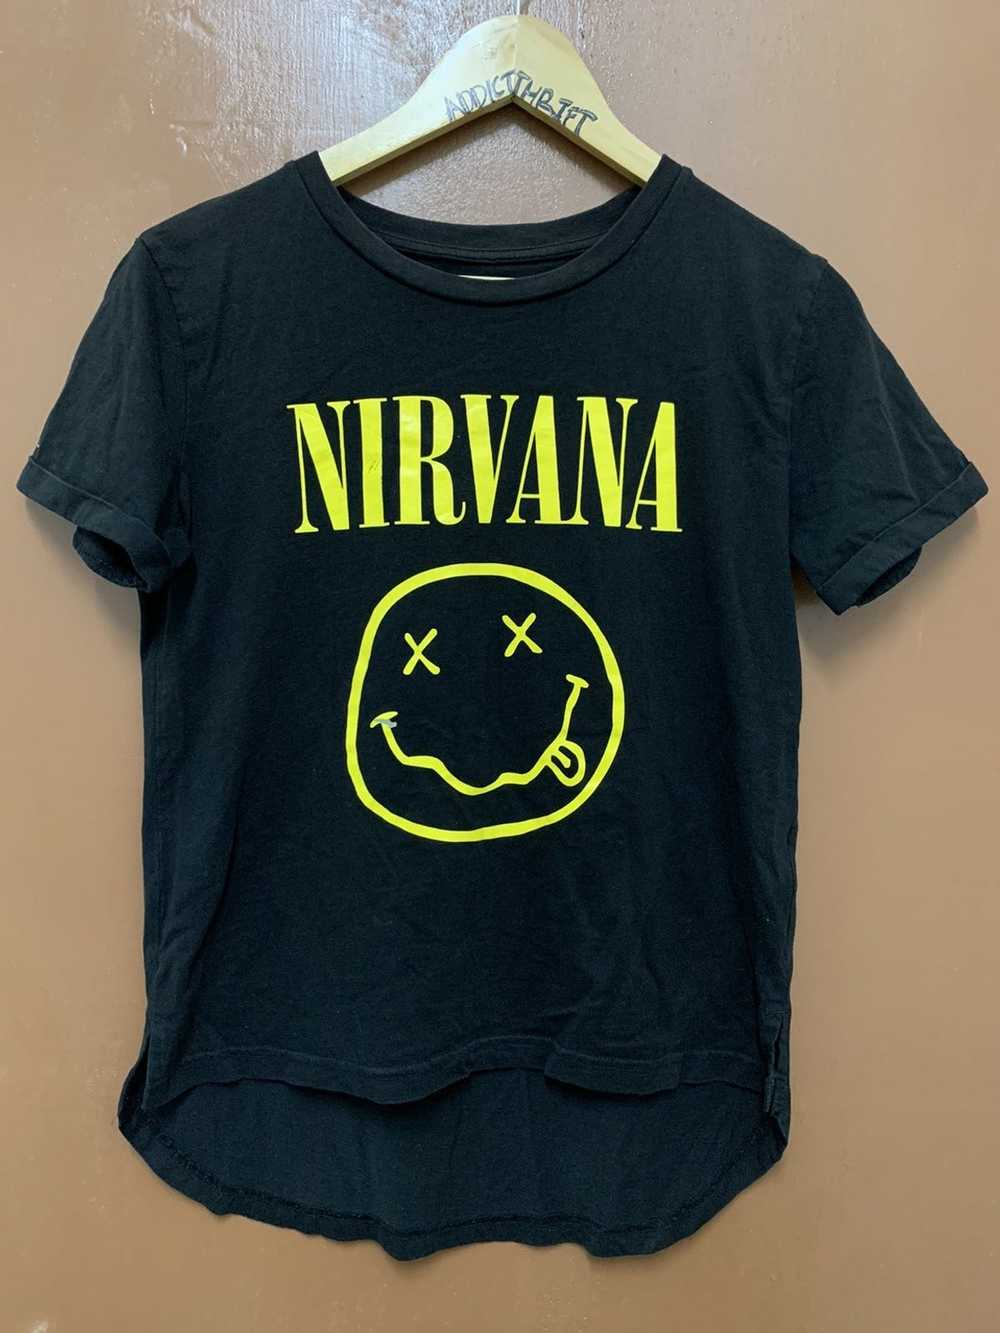 Band Tees × Nirvana NIRVANA BAND TEES VERY RARE - image 1